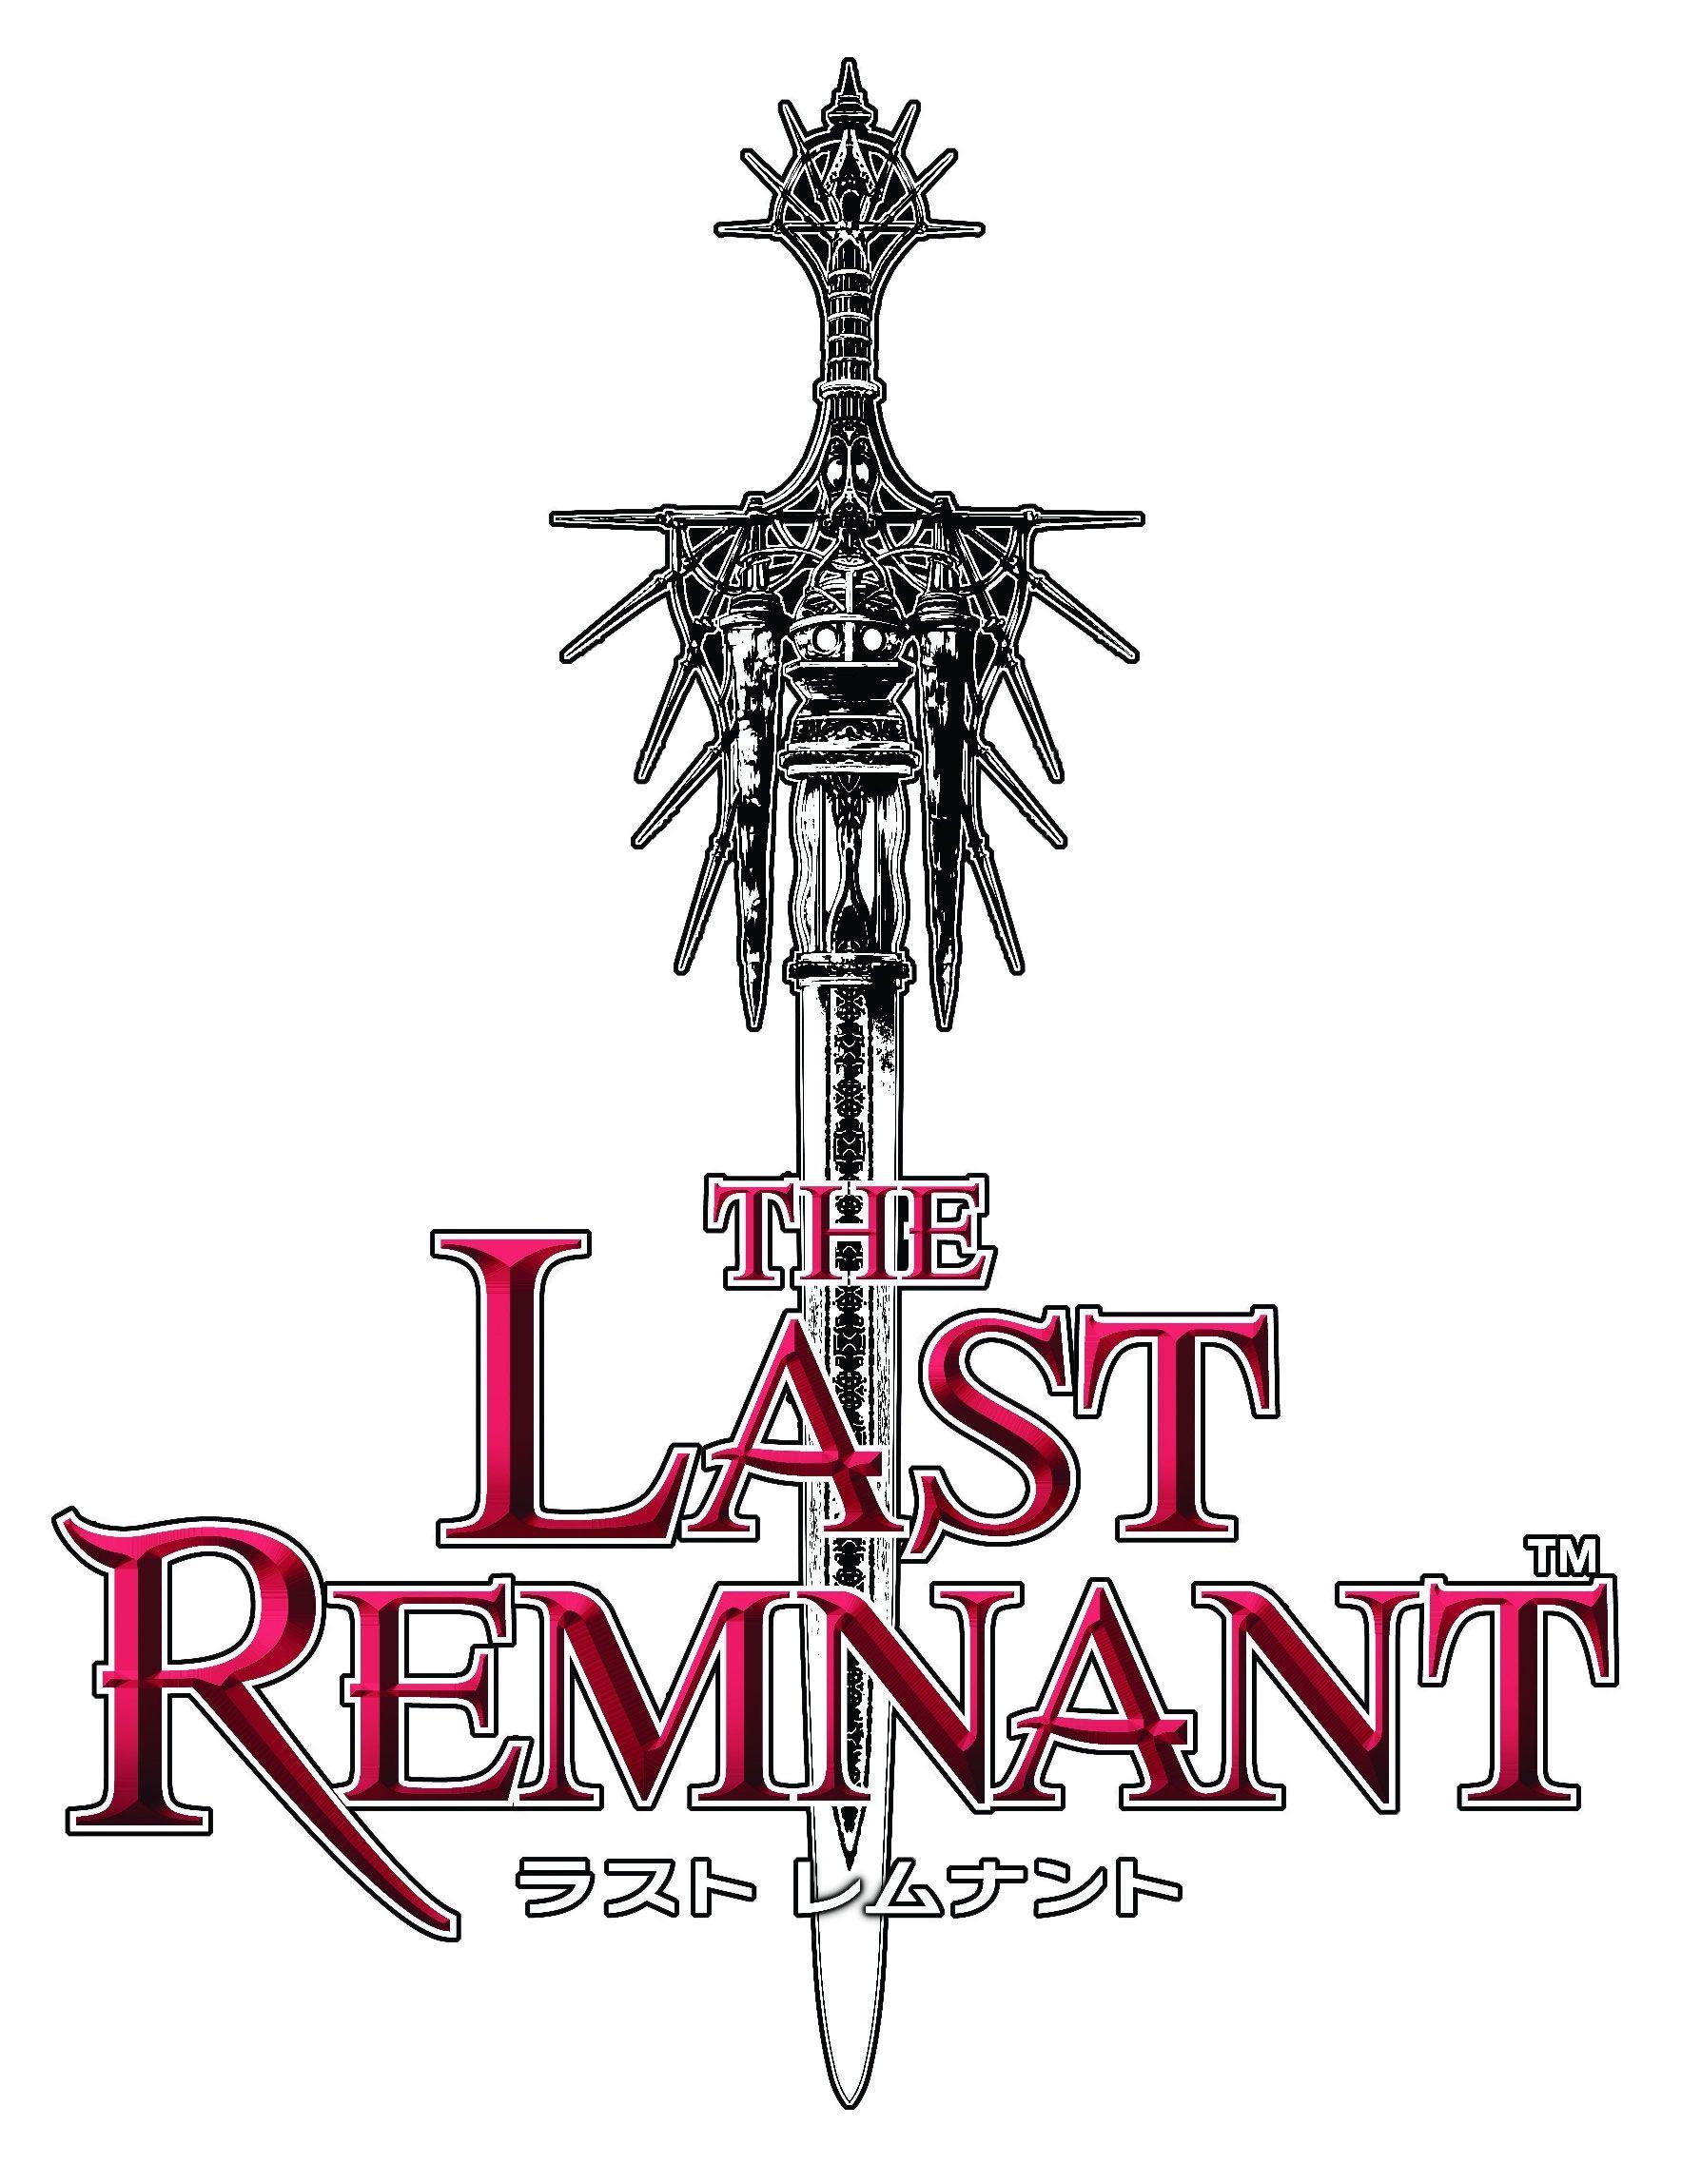 Remnant Logo - Index of /games/360/the-last-remnant/index